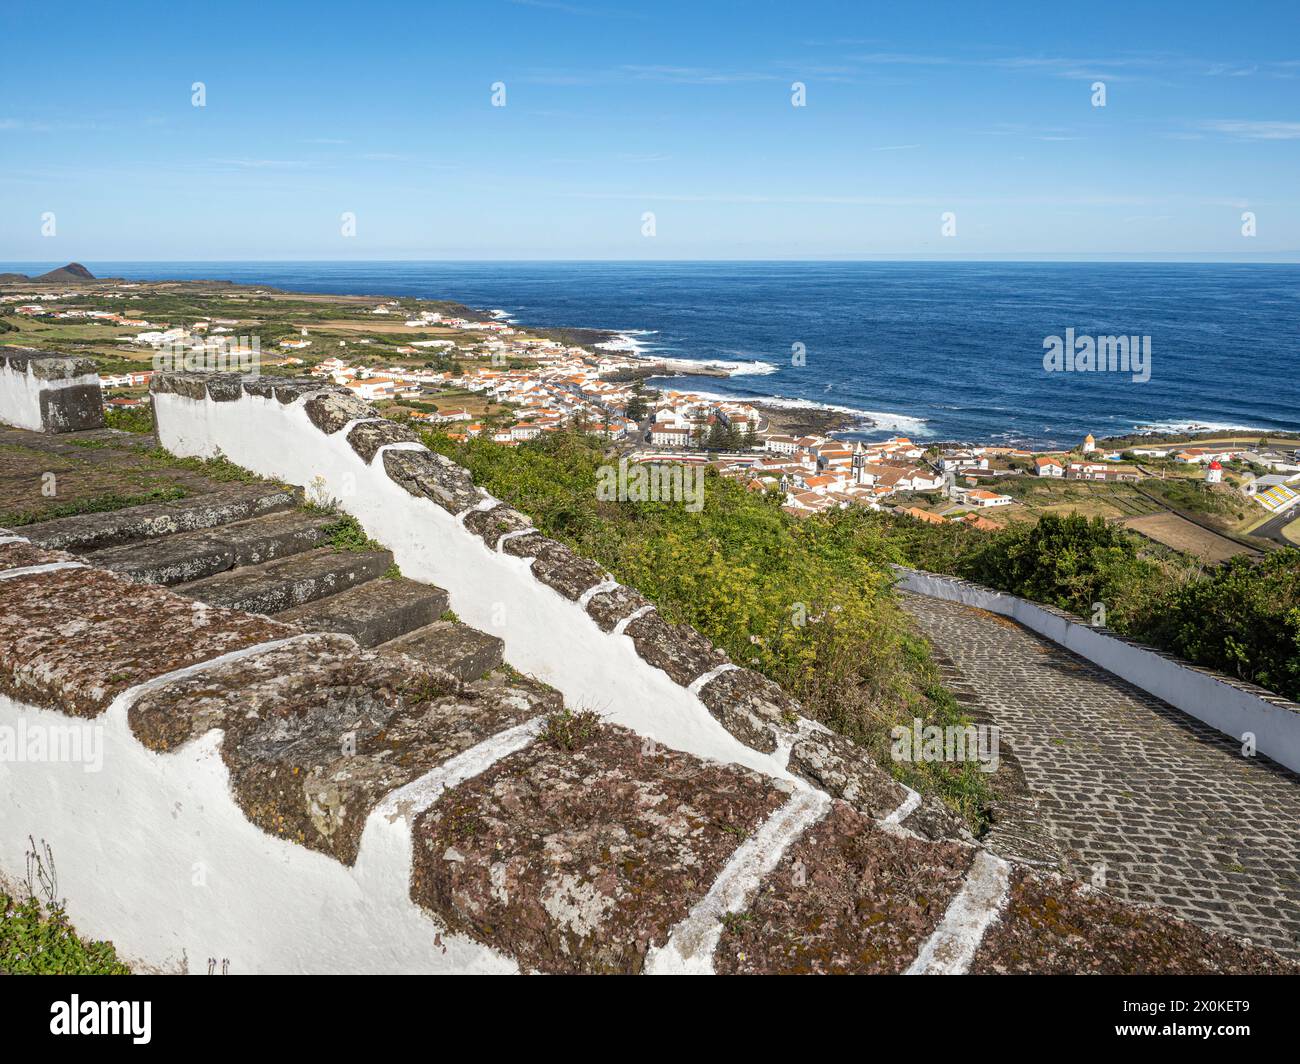 Panorama, Açores, île de Graciosa, Portugal, communauté côtière, communauté balnéaire, ville de Santa Cruz de Graciosa, vue de l'Ermitage de Nossa Senhora da Ajuda, archipel de l'océan Atlantique Banque D'Images